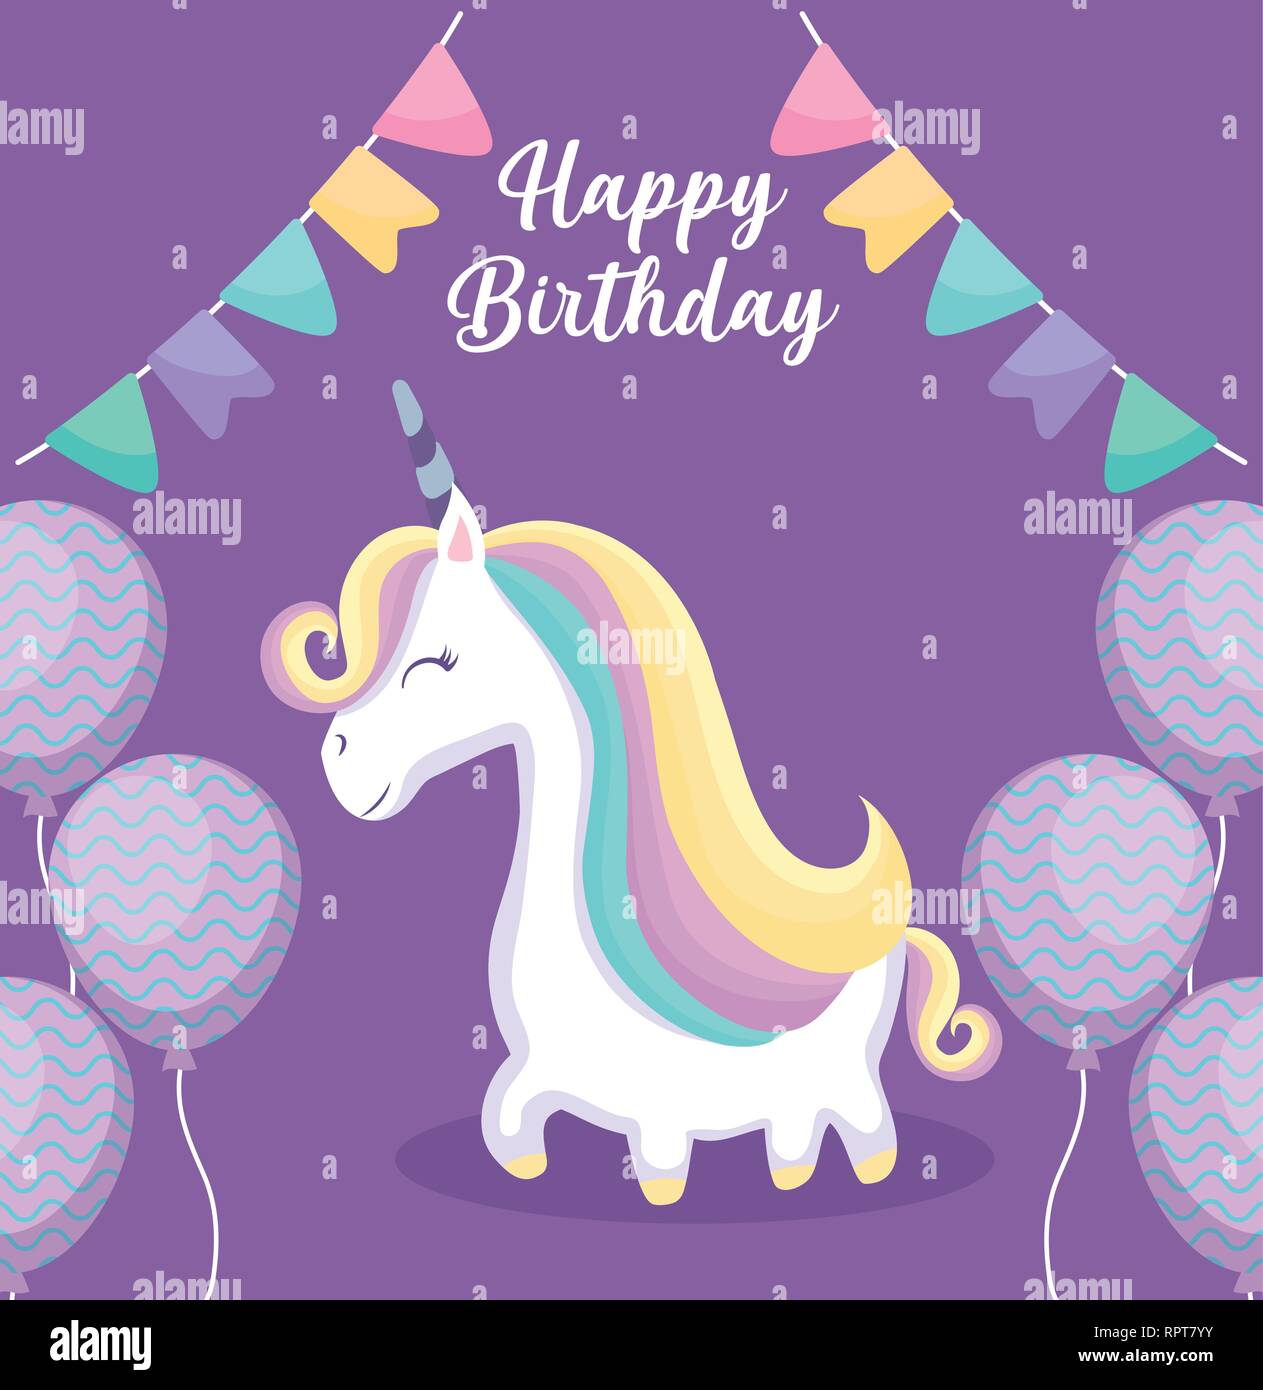 happy birthday card with cute unicorn vector illustration design Stock ...